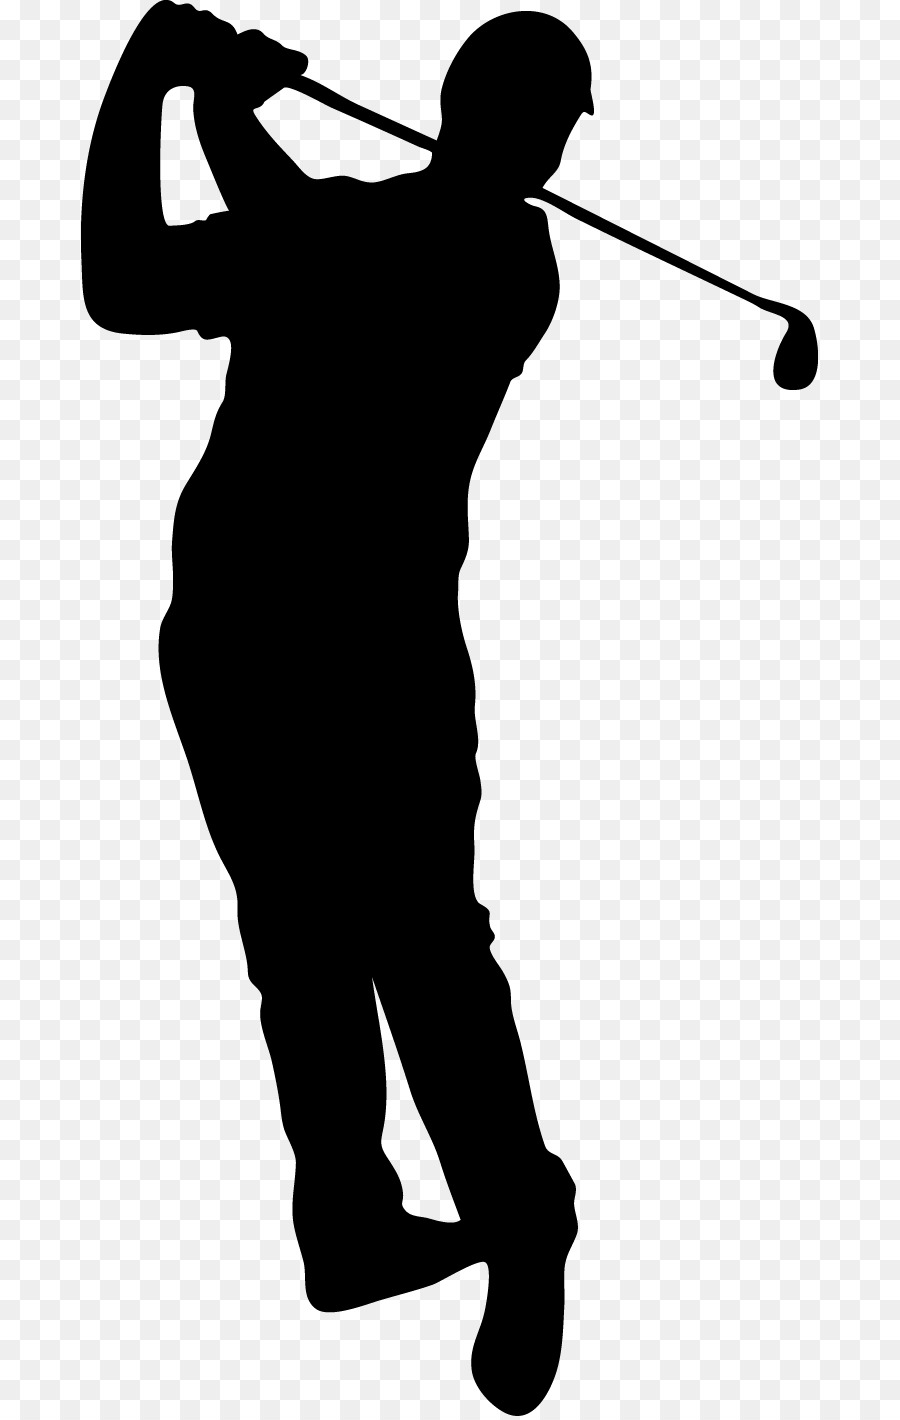 Paris Golf Club Golf course Masters Tournament Golf Balls - Golf png download - 737*1416 - Free Transparent Golf png Download.